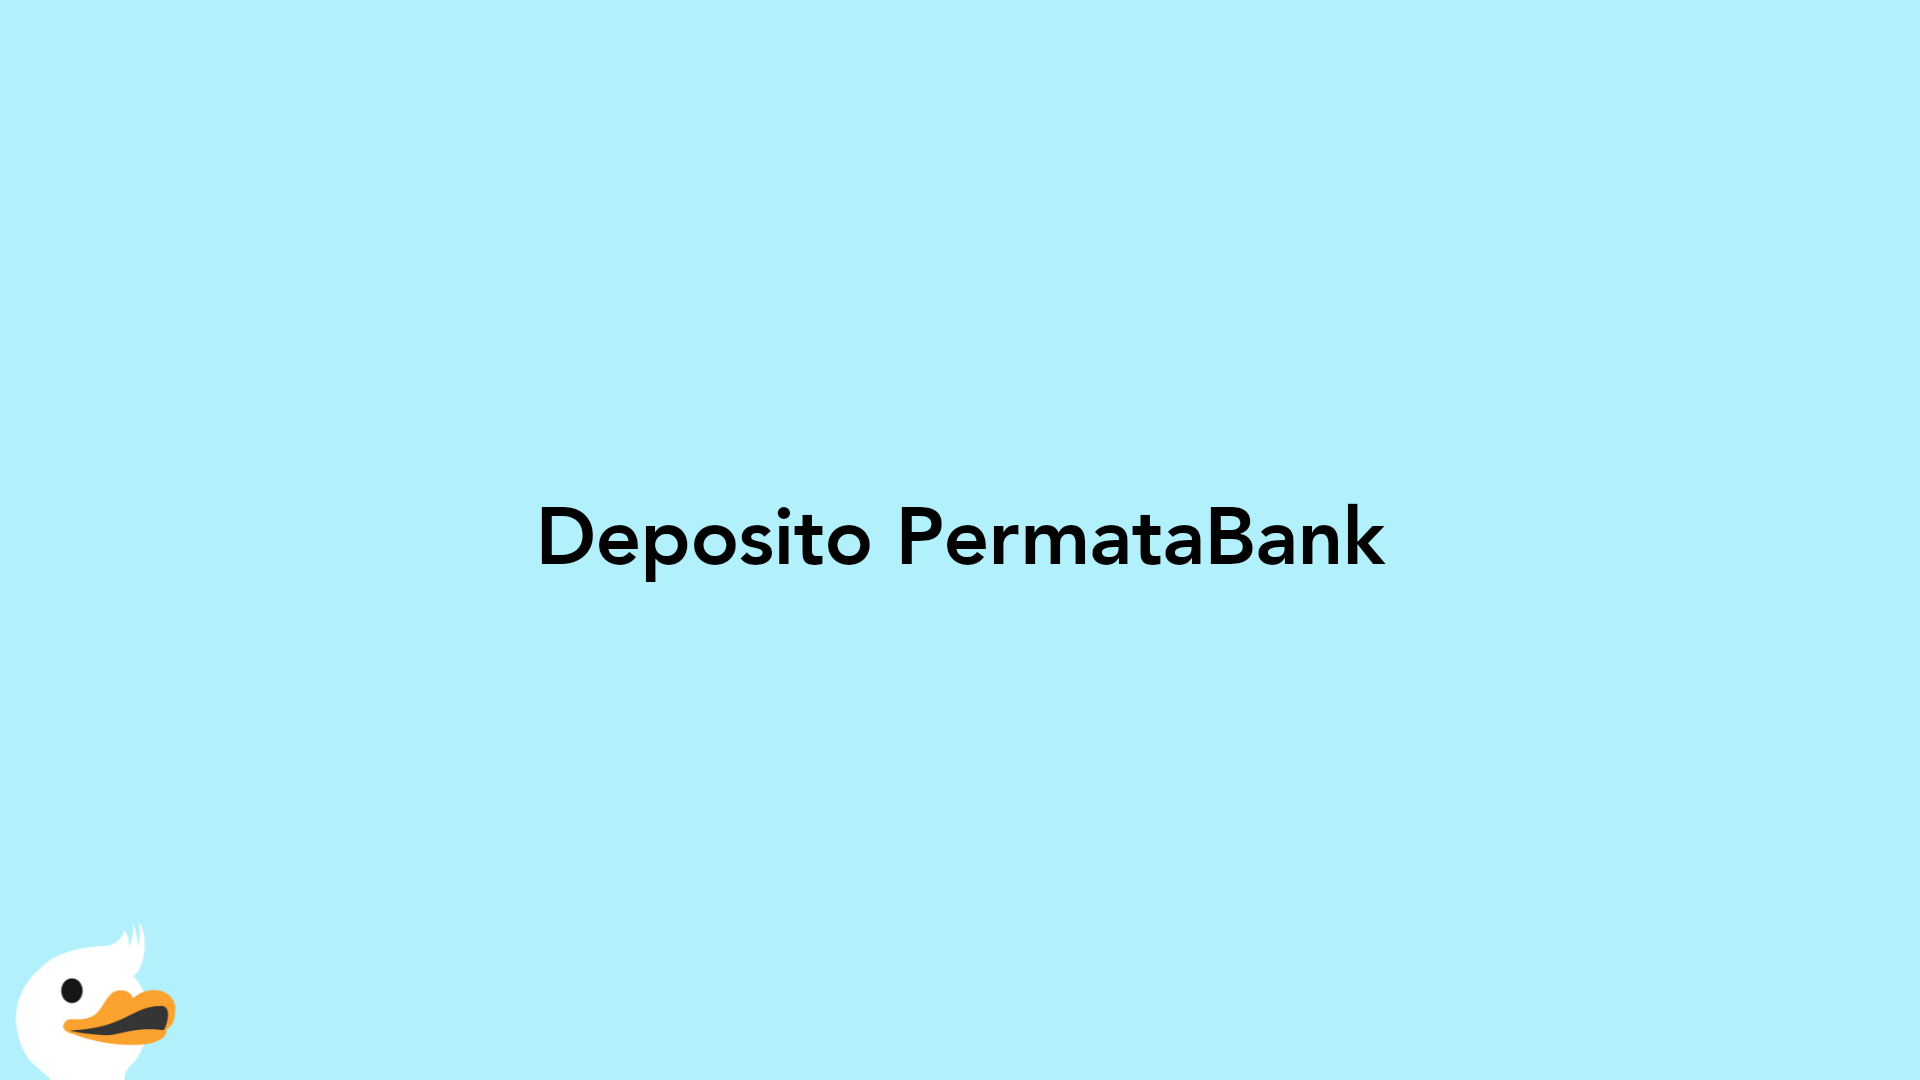 Deposito PermataBank